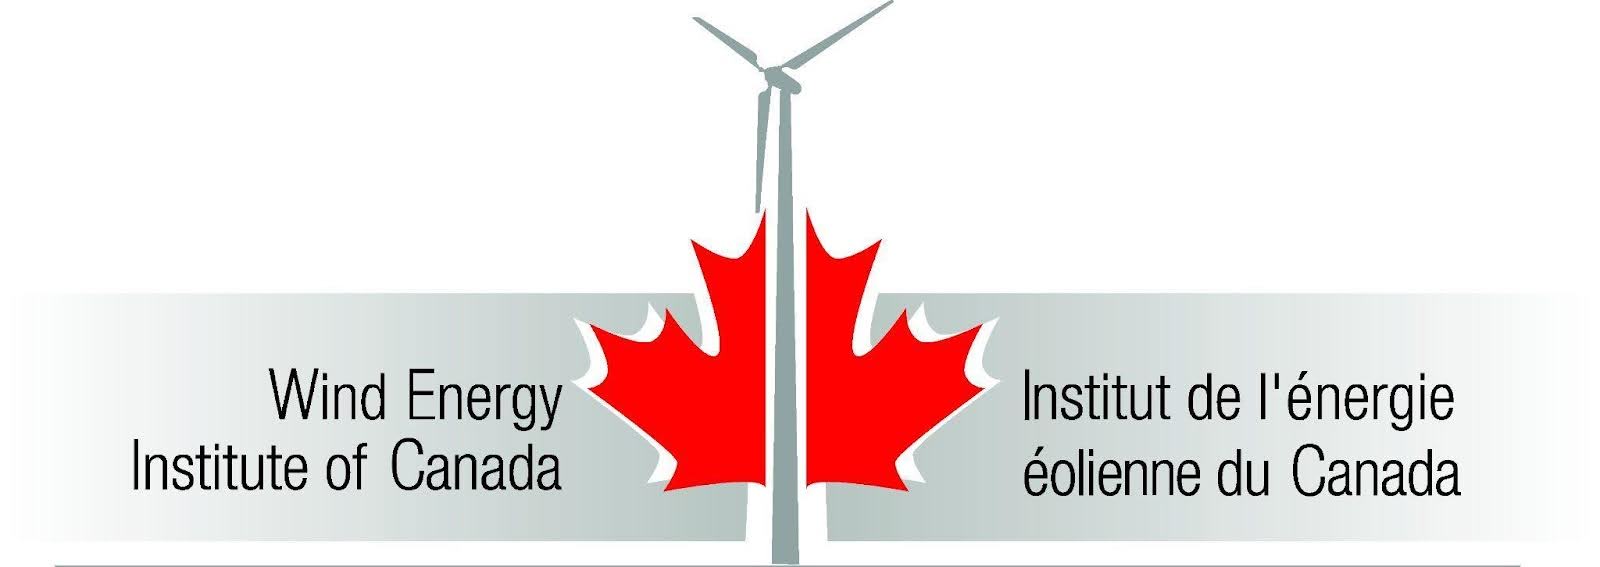 The Wind Energy Institute of Canada